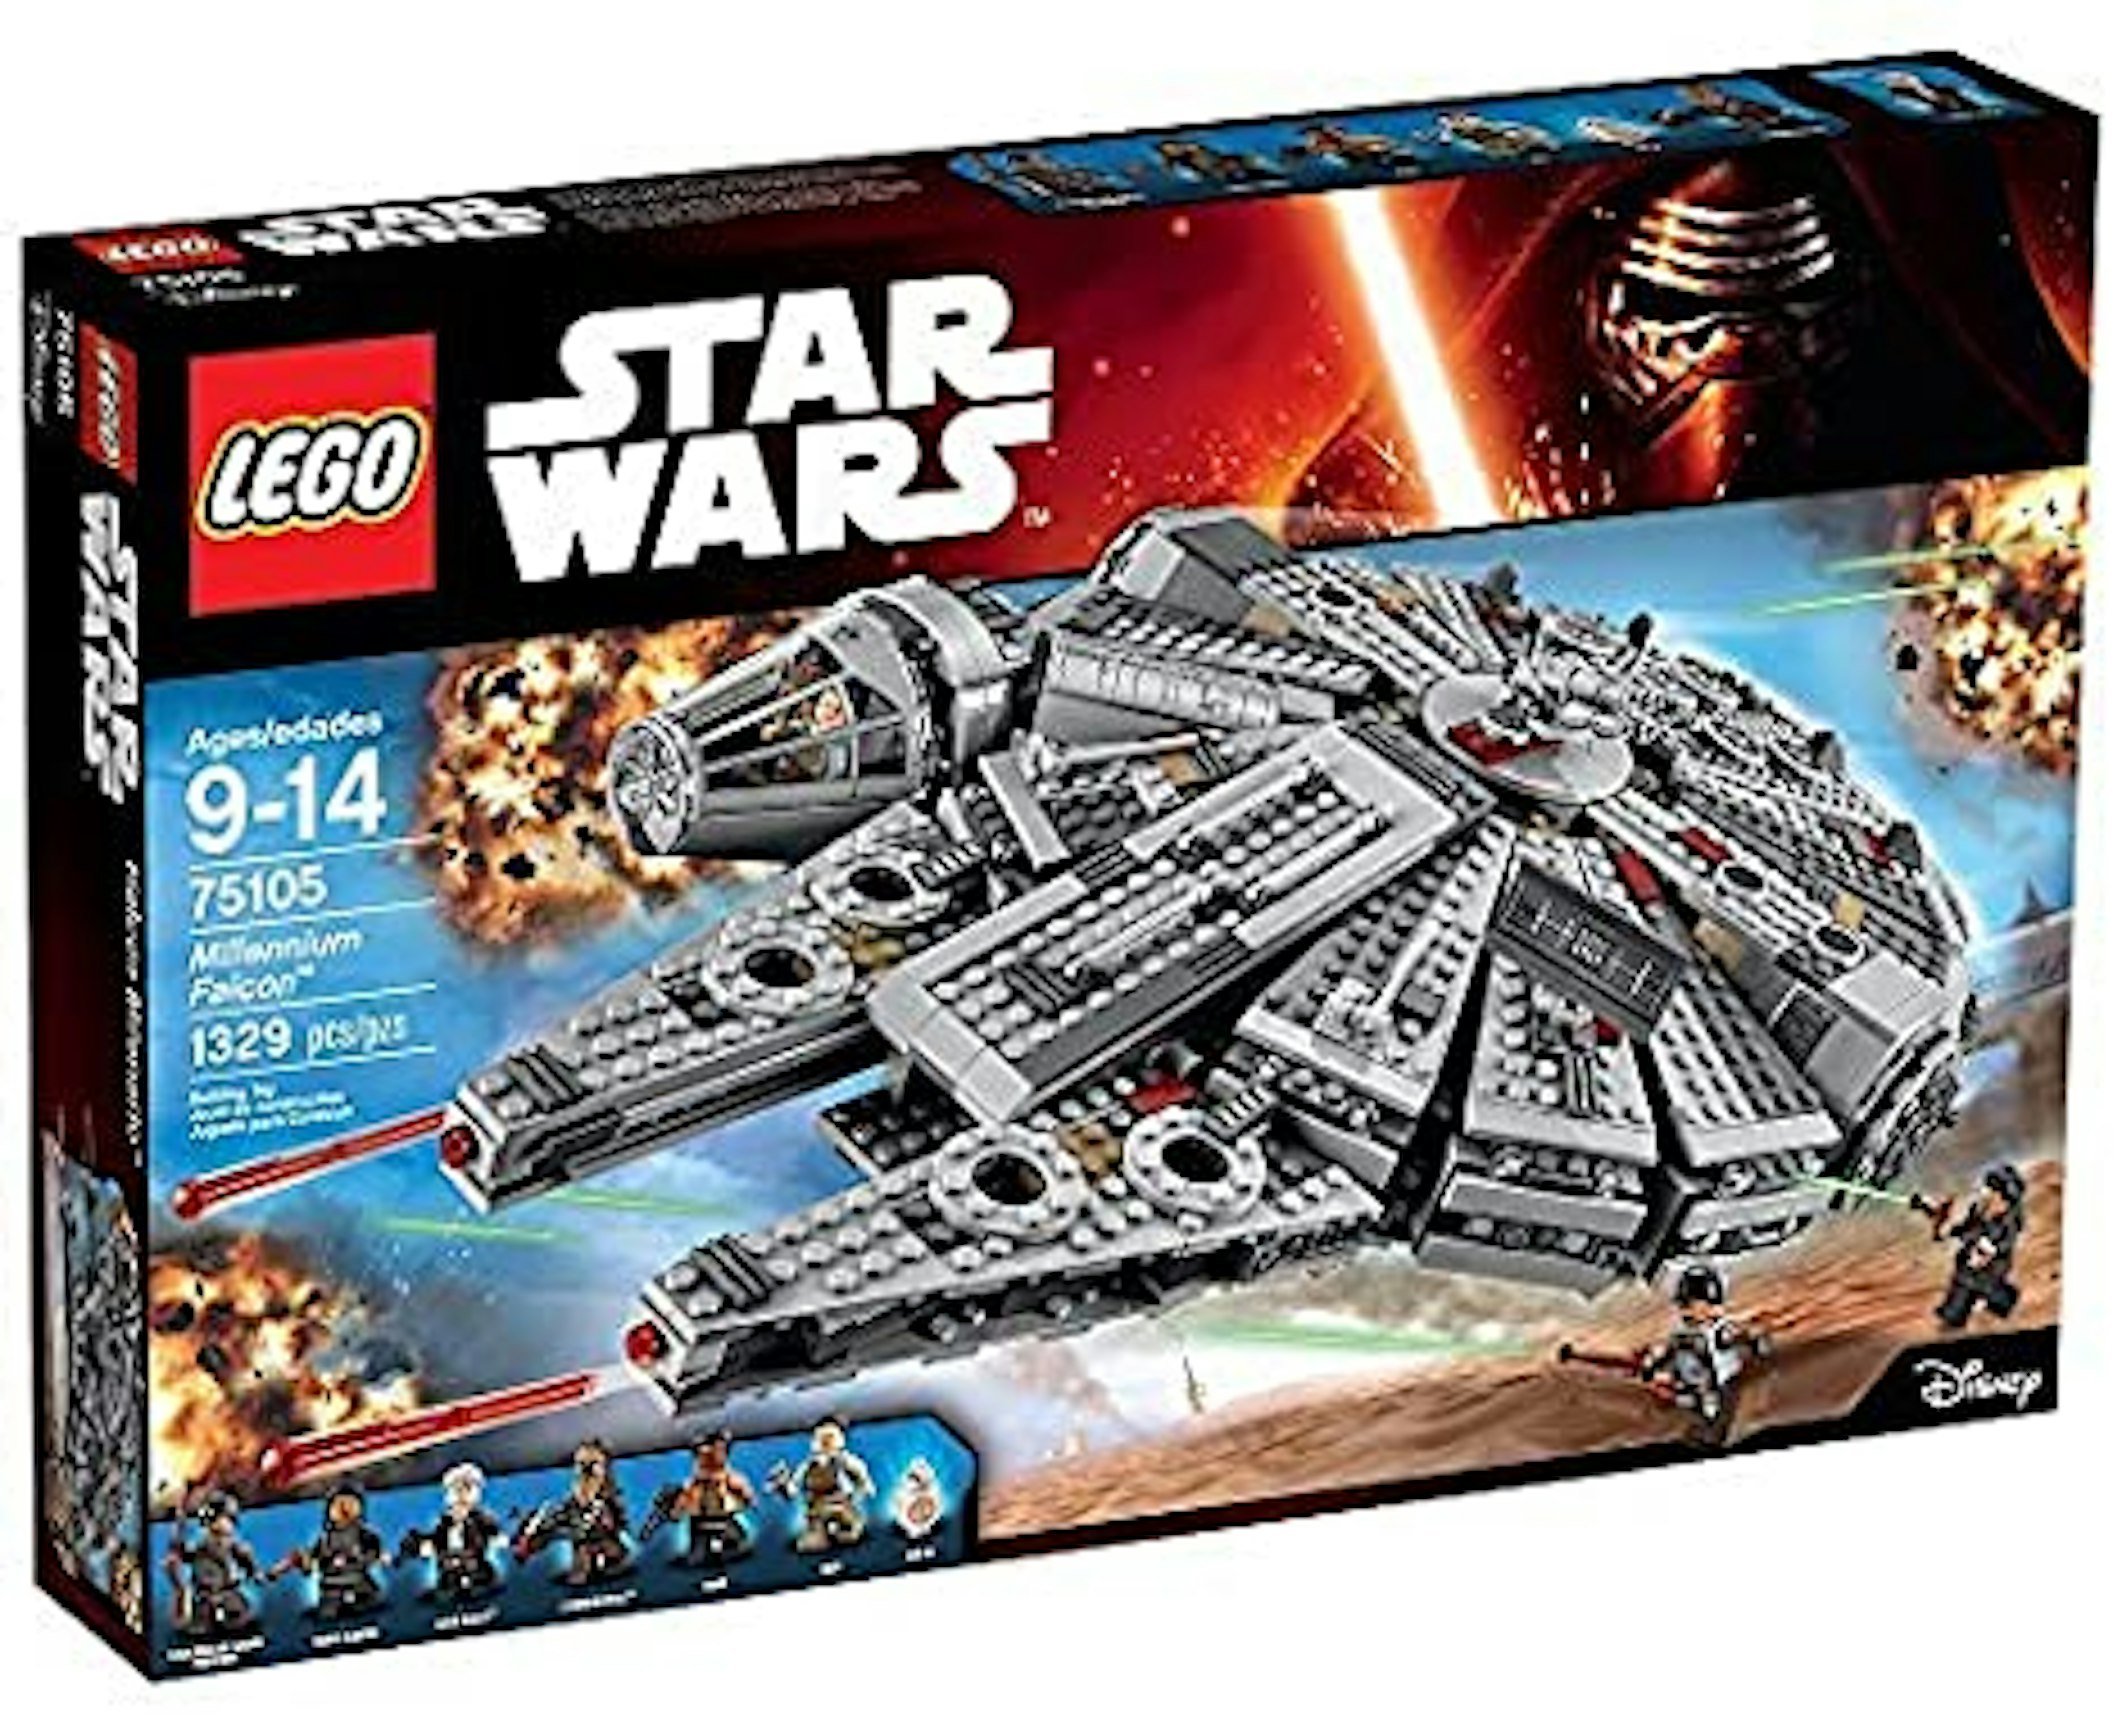 lomme inaktive antage LEGO Star Wars Millennium Falcon Set 75105 - US